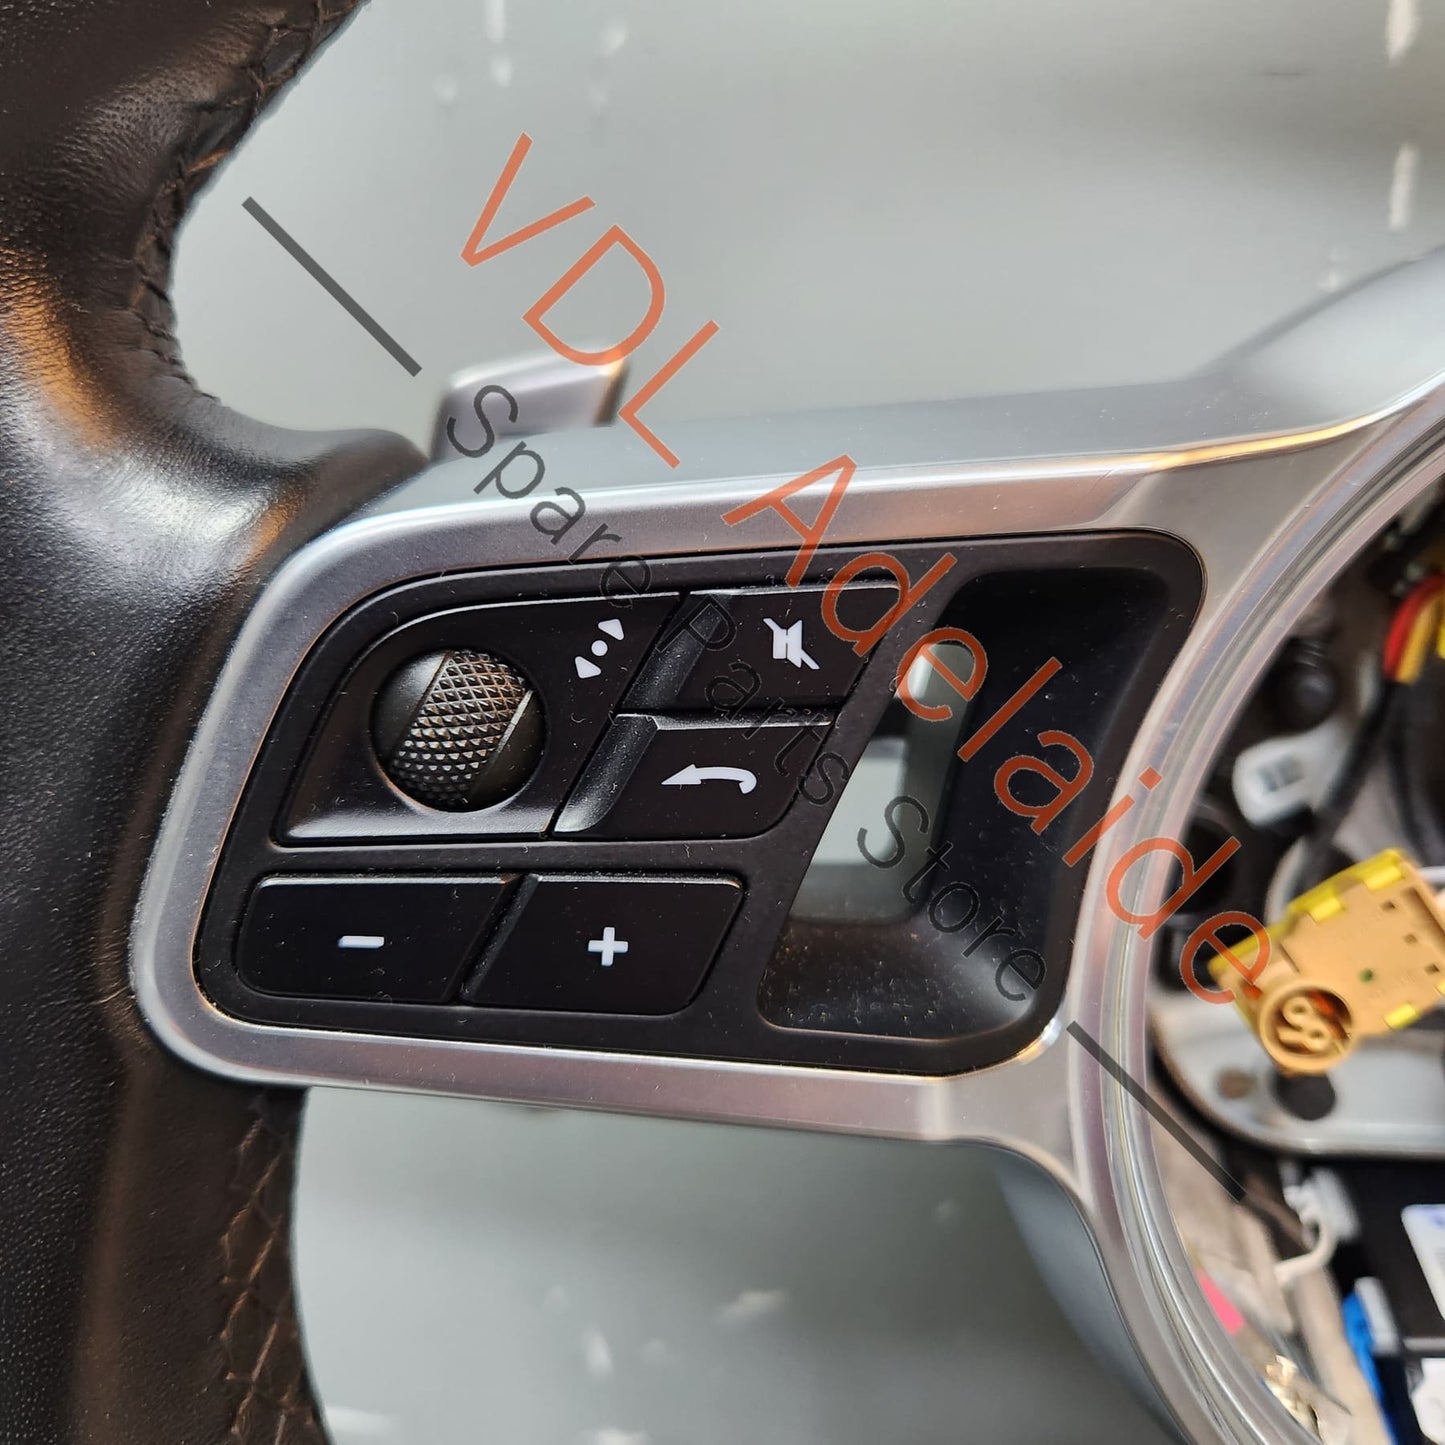 Porsche PSRB Sport Mode Chrono Multifunction Black Steering Wheel w PDK Paddles